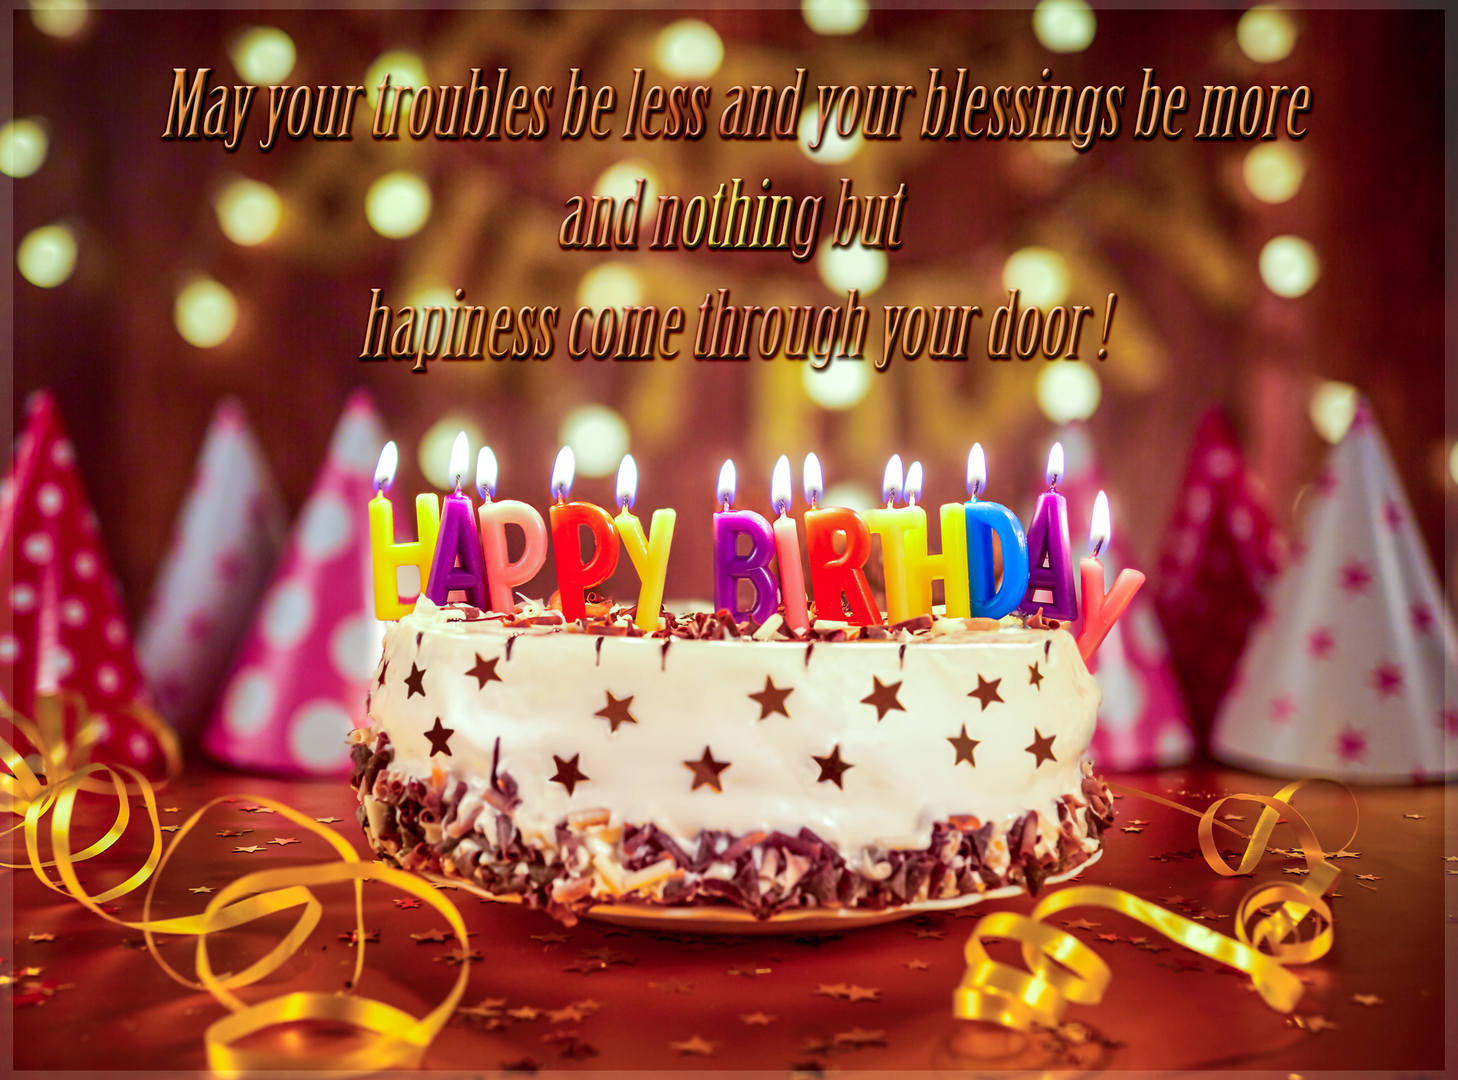 Happy Birthday Greeting Card with Birthday Cake (1)